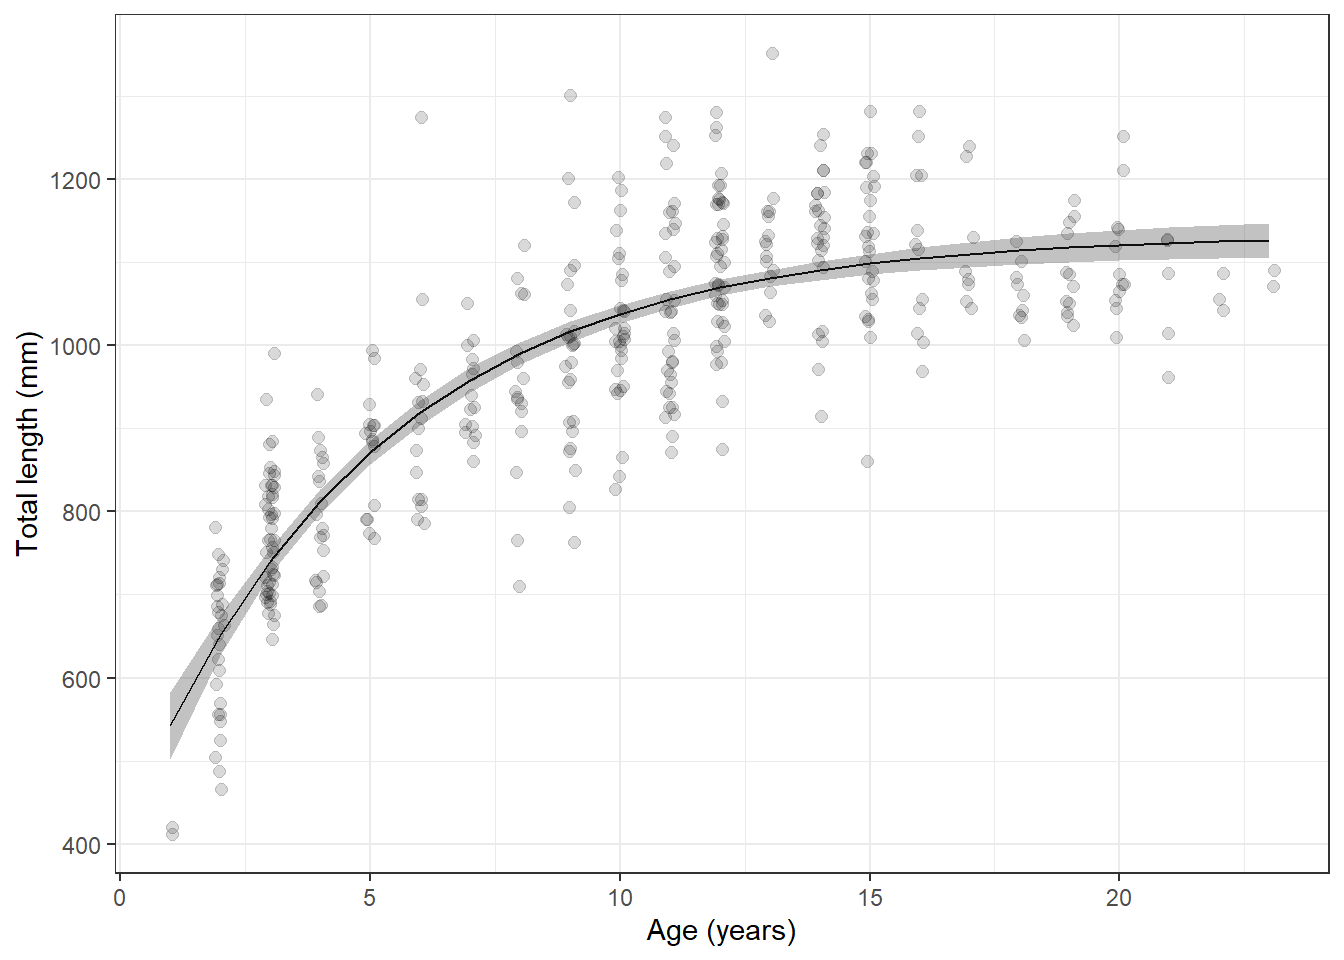 The von Bertalanffy growth parameters values of C. regium reported from